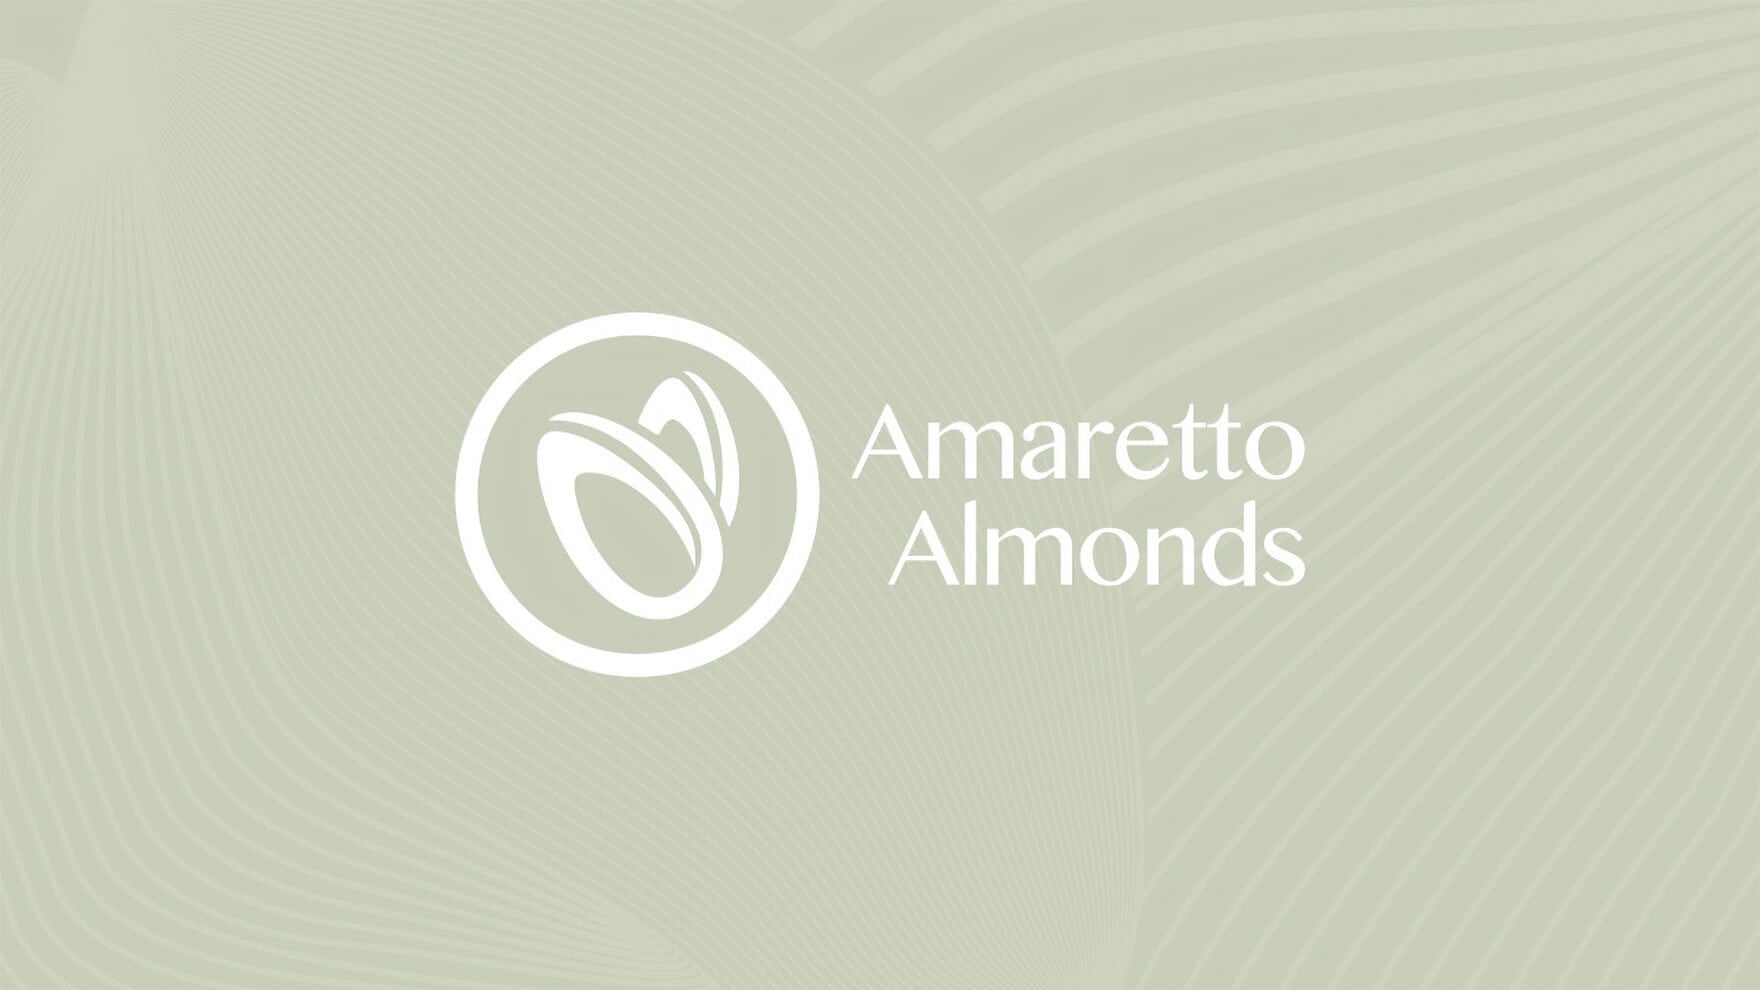 Branding Agency Hong Kong_Amaretto Almonds_Corporate Identity Design_CheddarMedia_01_1760